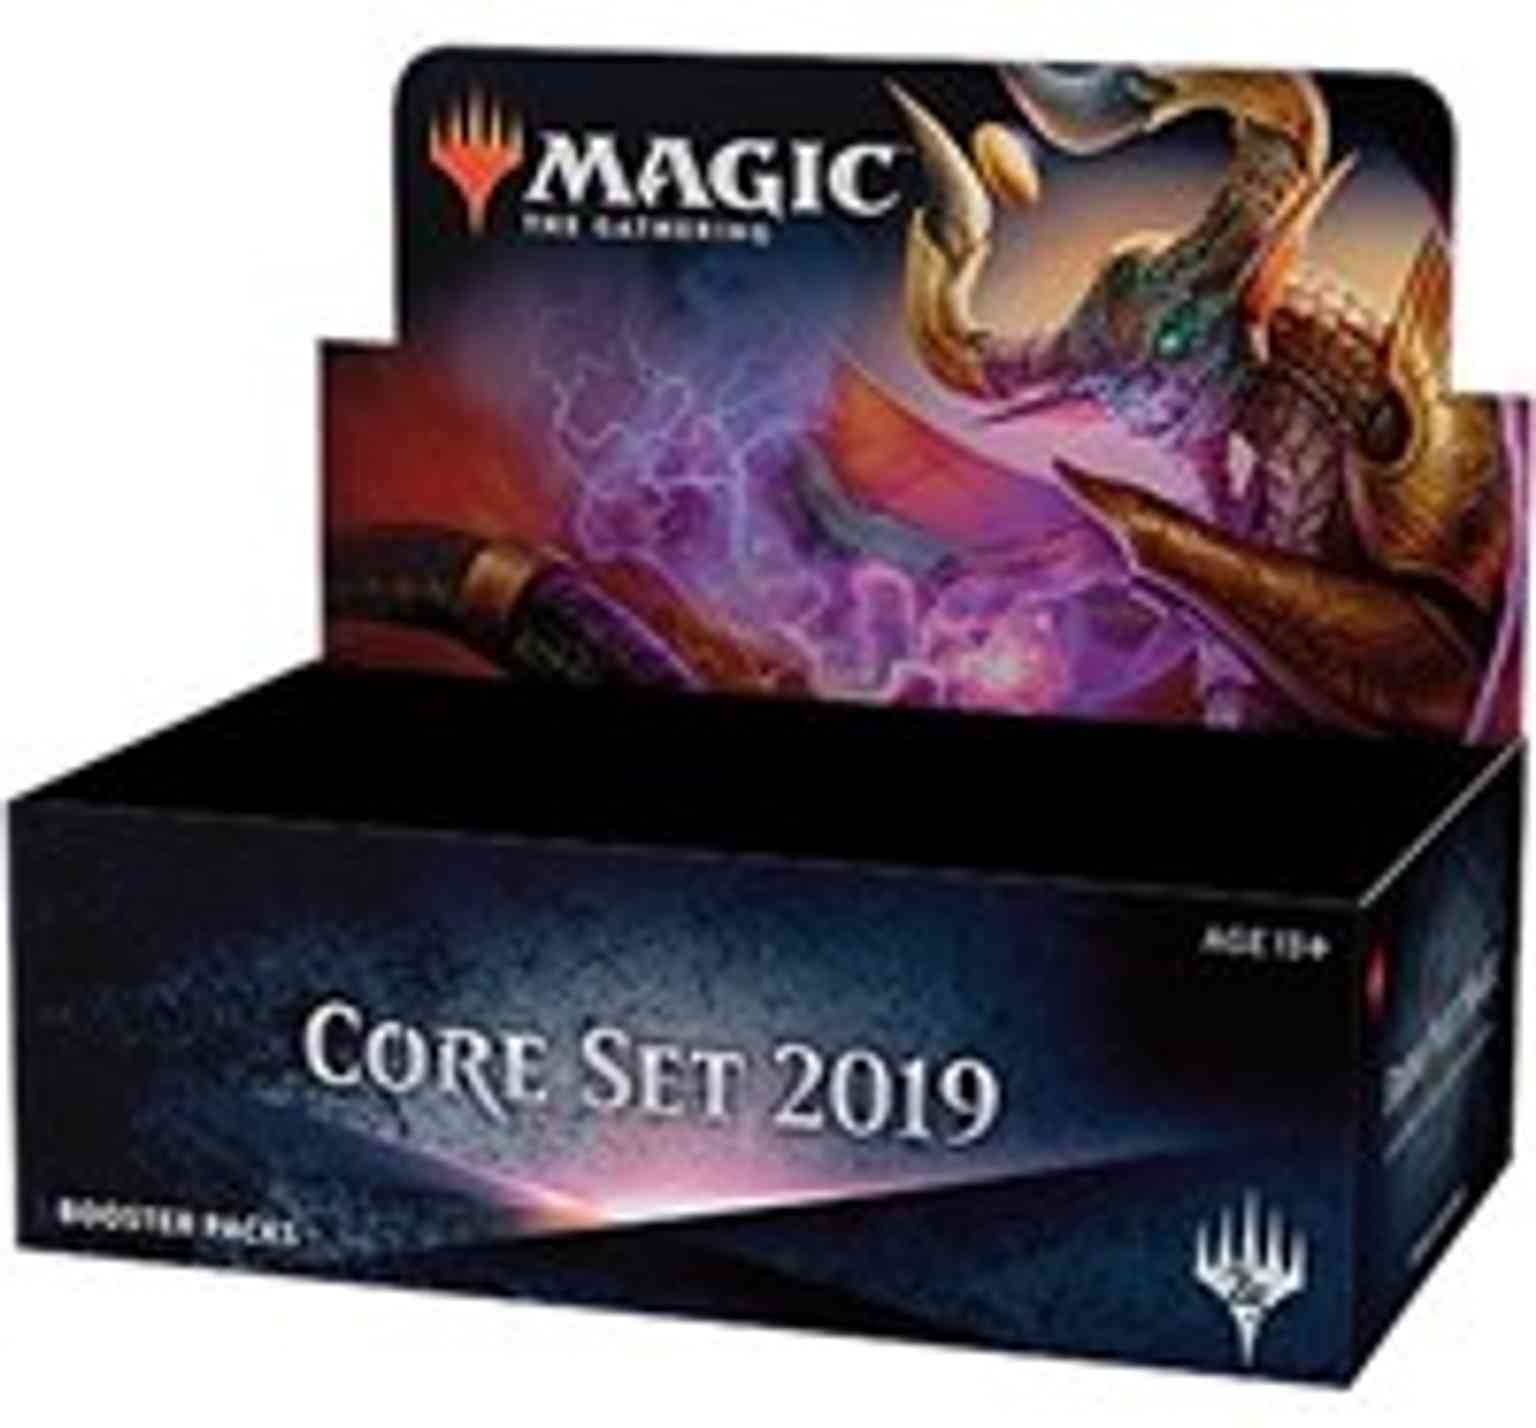 Core Set 2019 - Booster Box magic card front